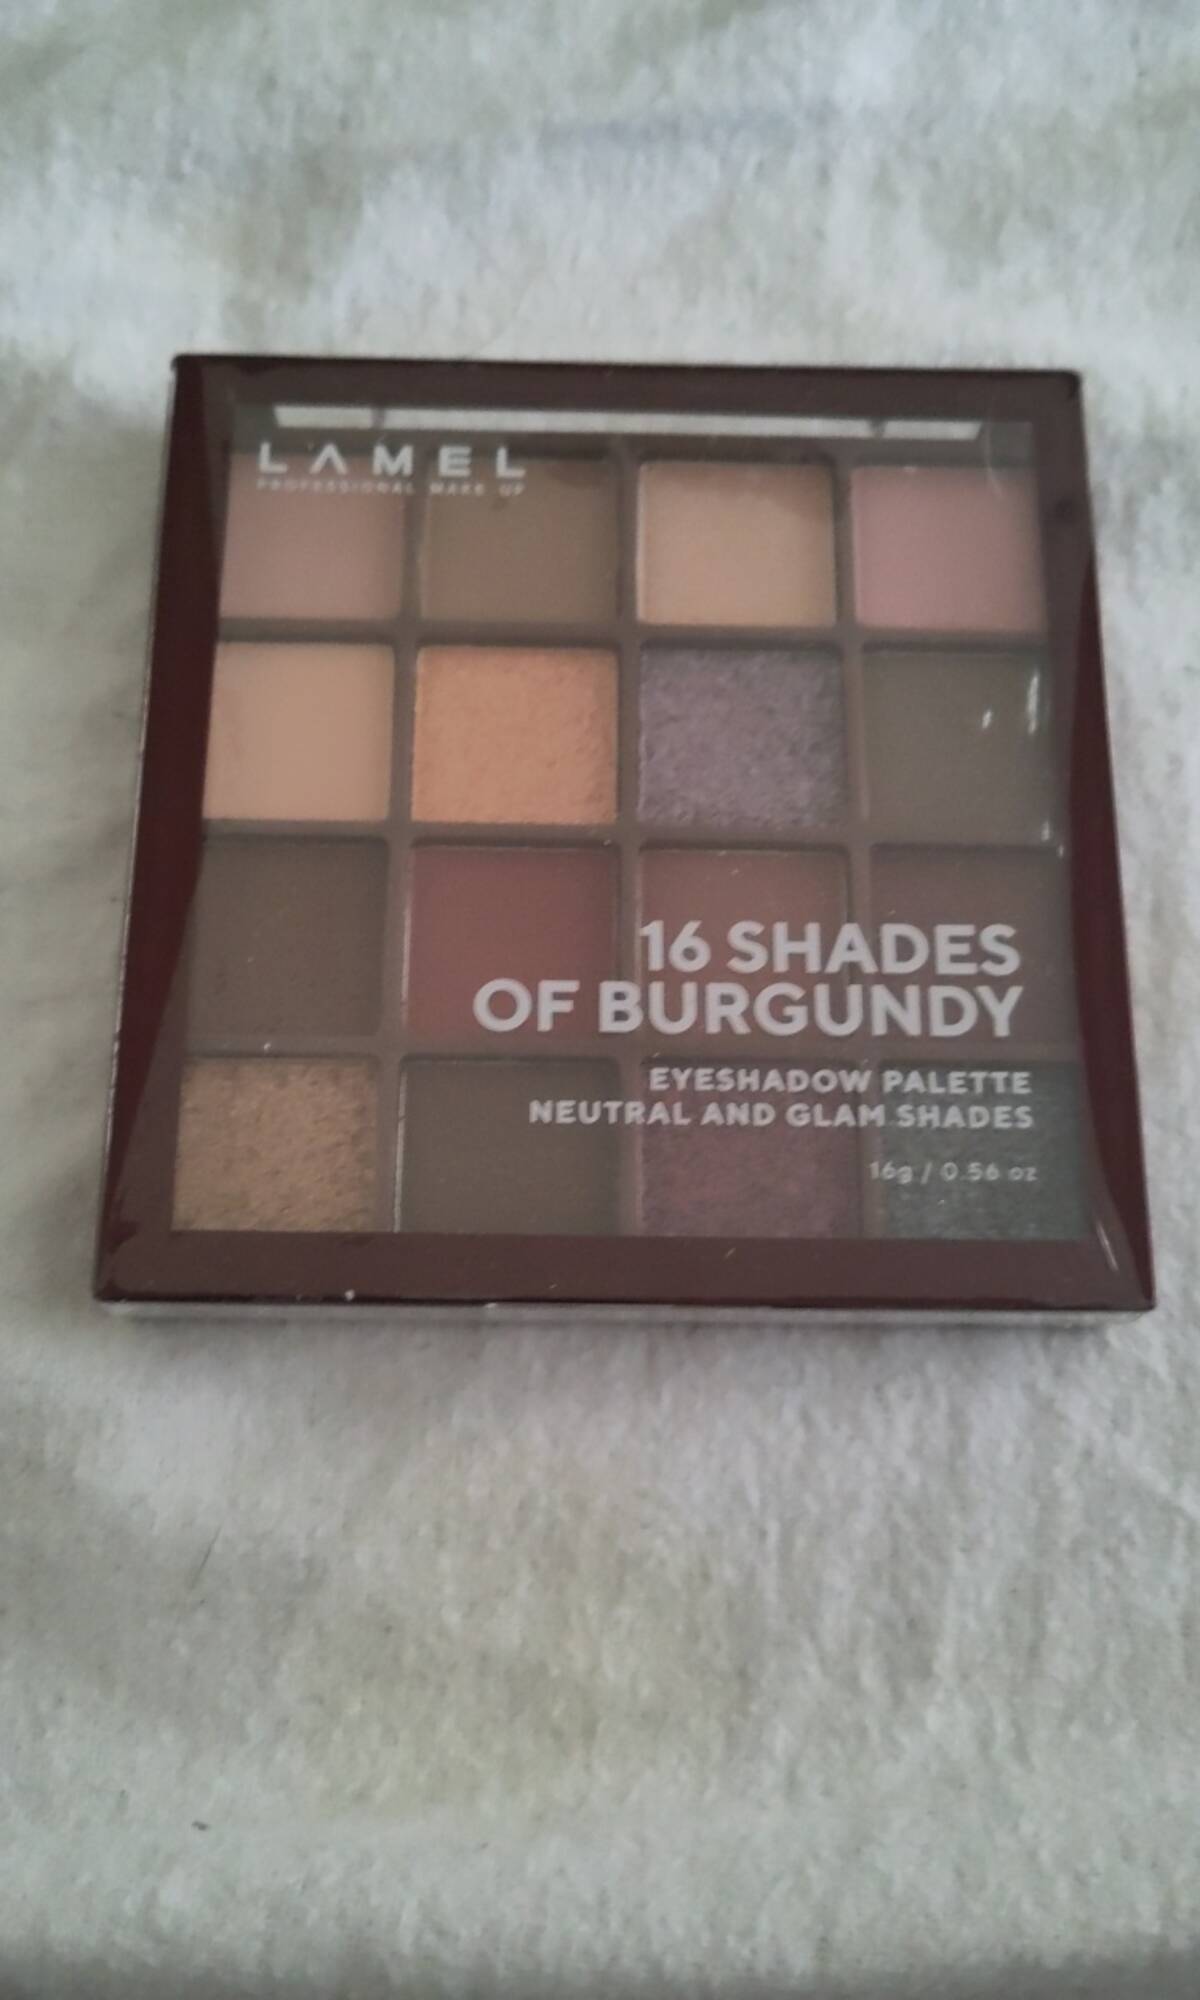 LAMEL - 16 shades of burgundy - Eyeshadow palette